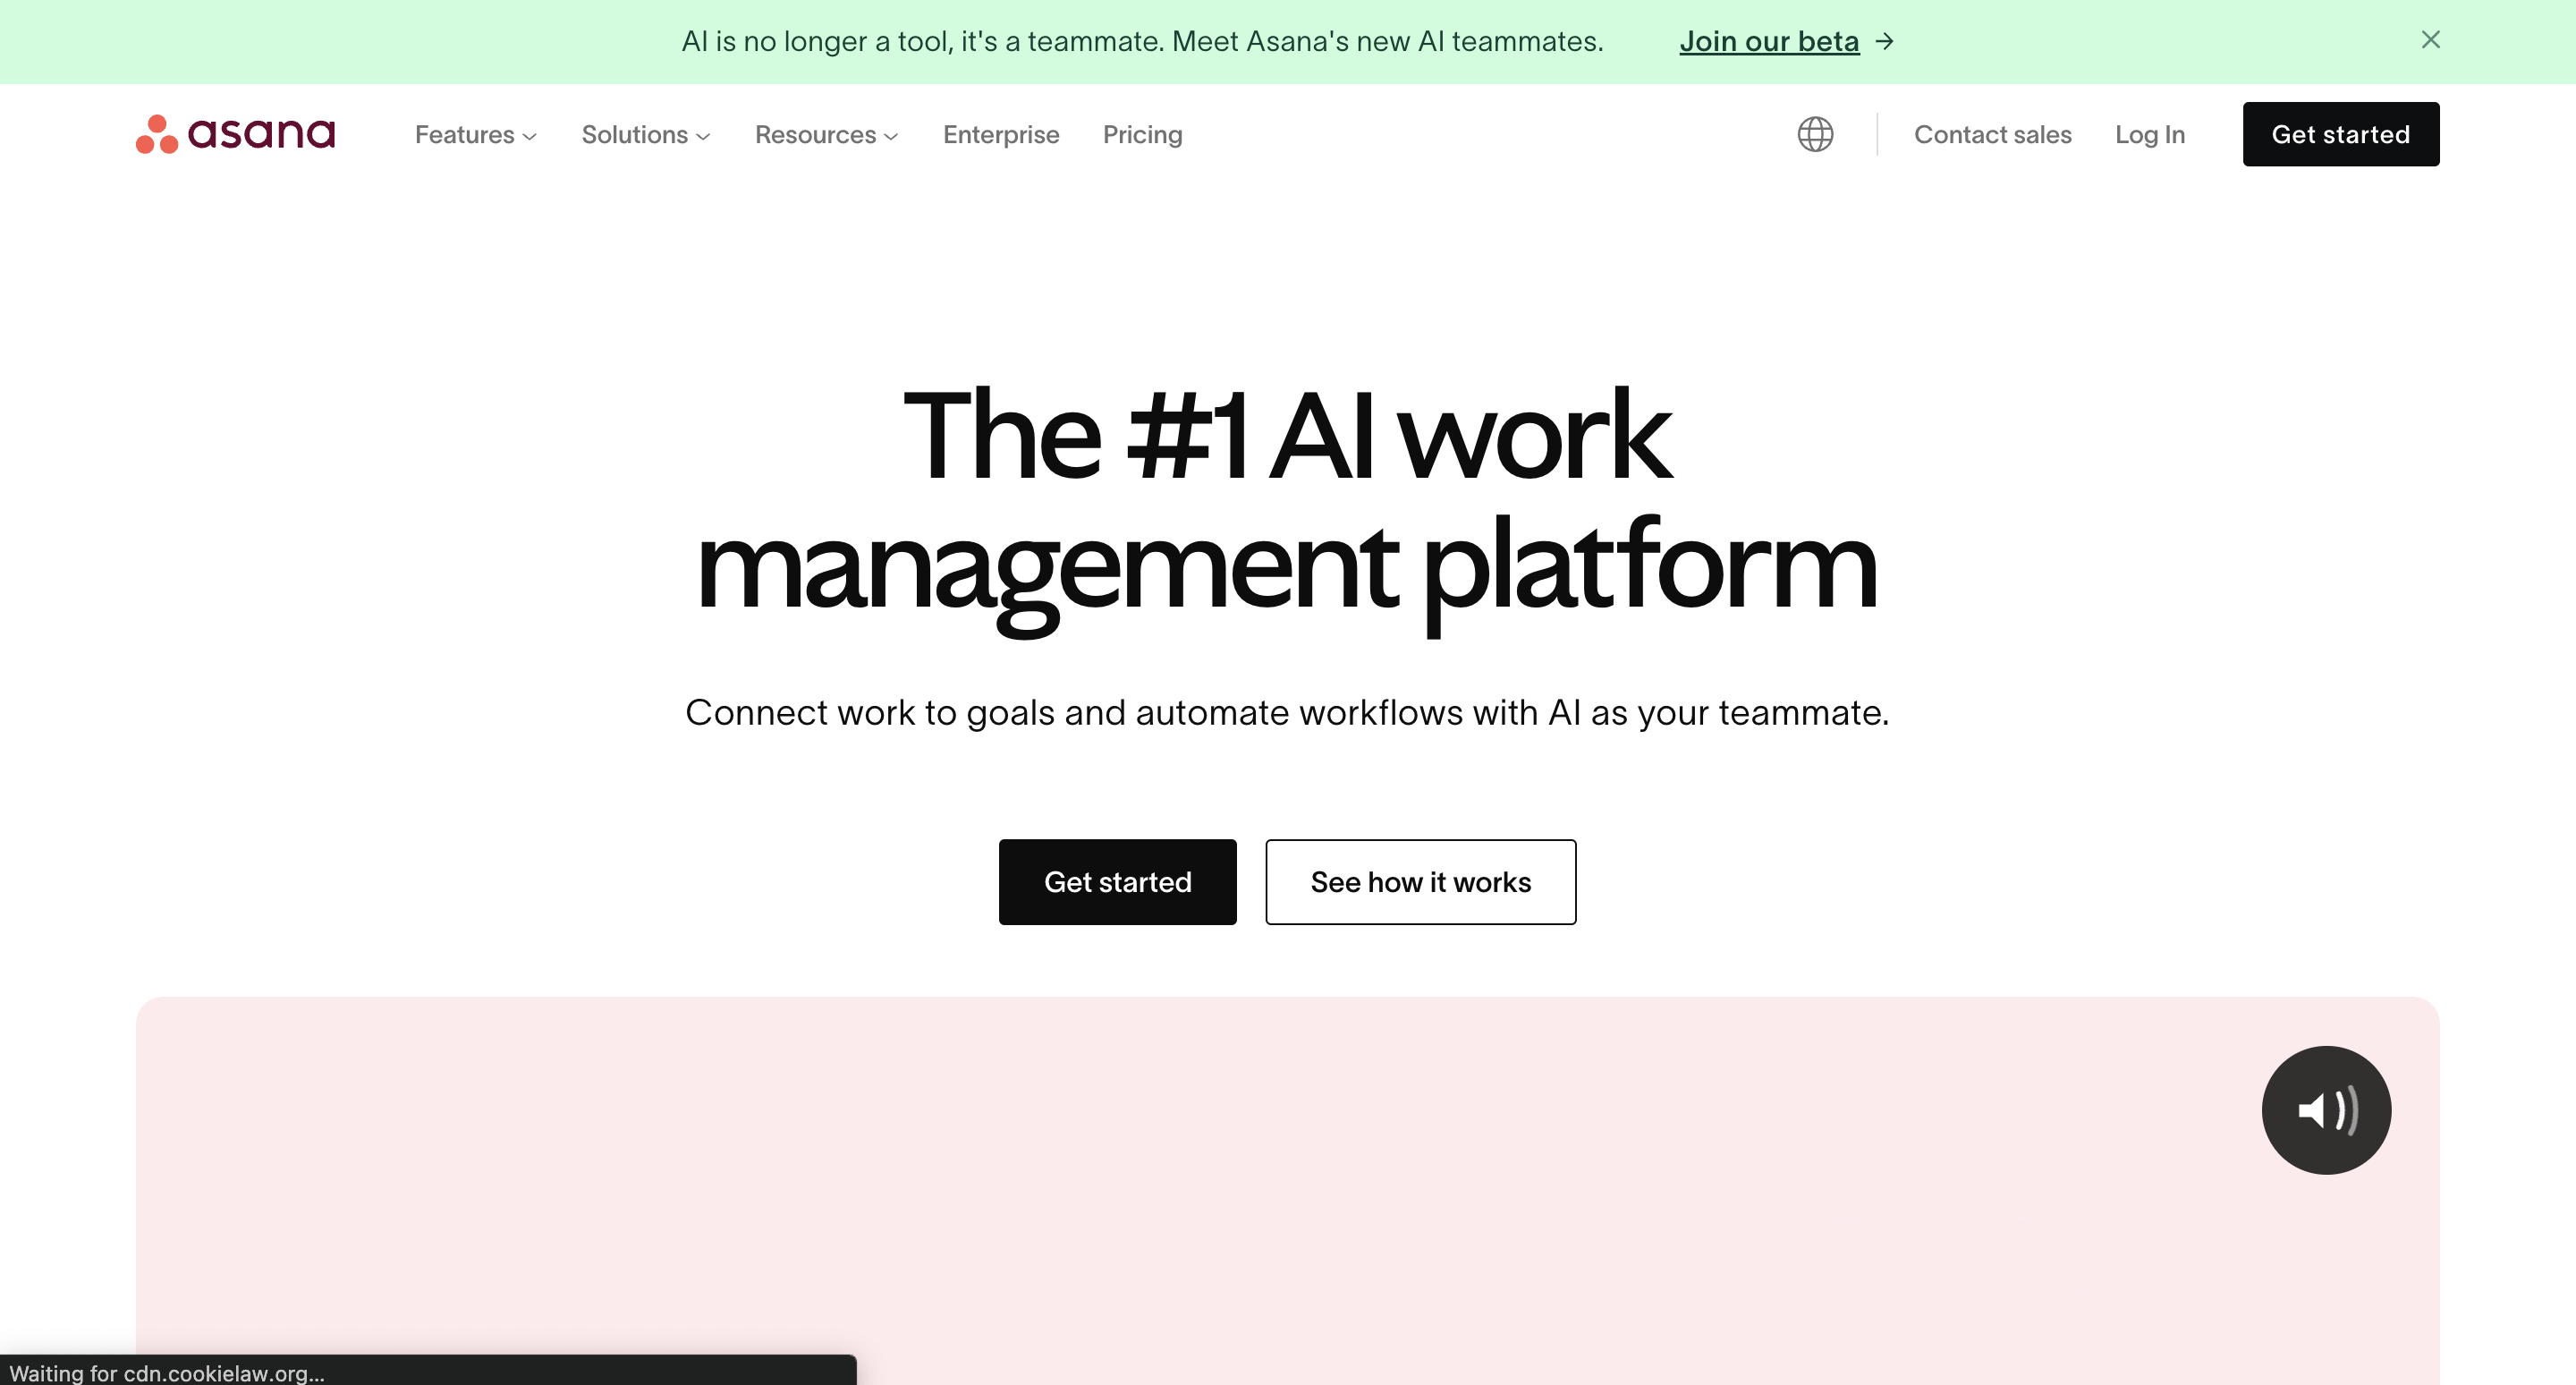 asana work management platform for project management